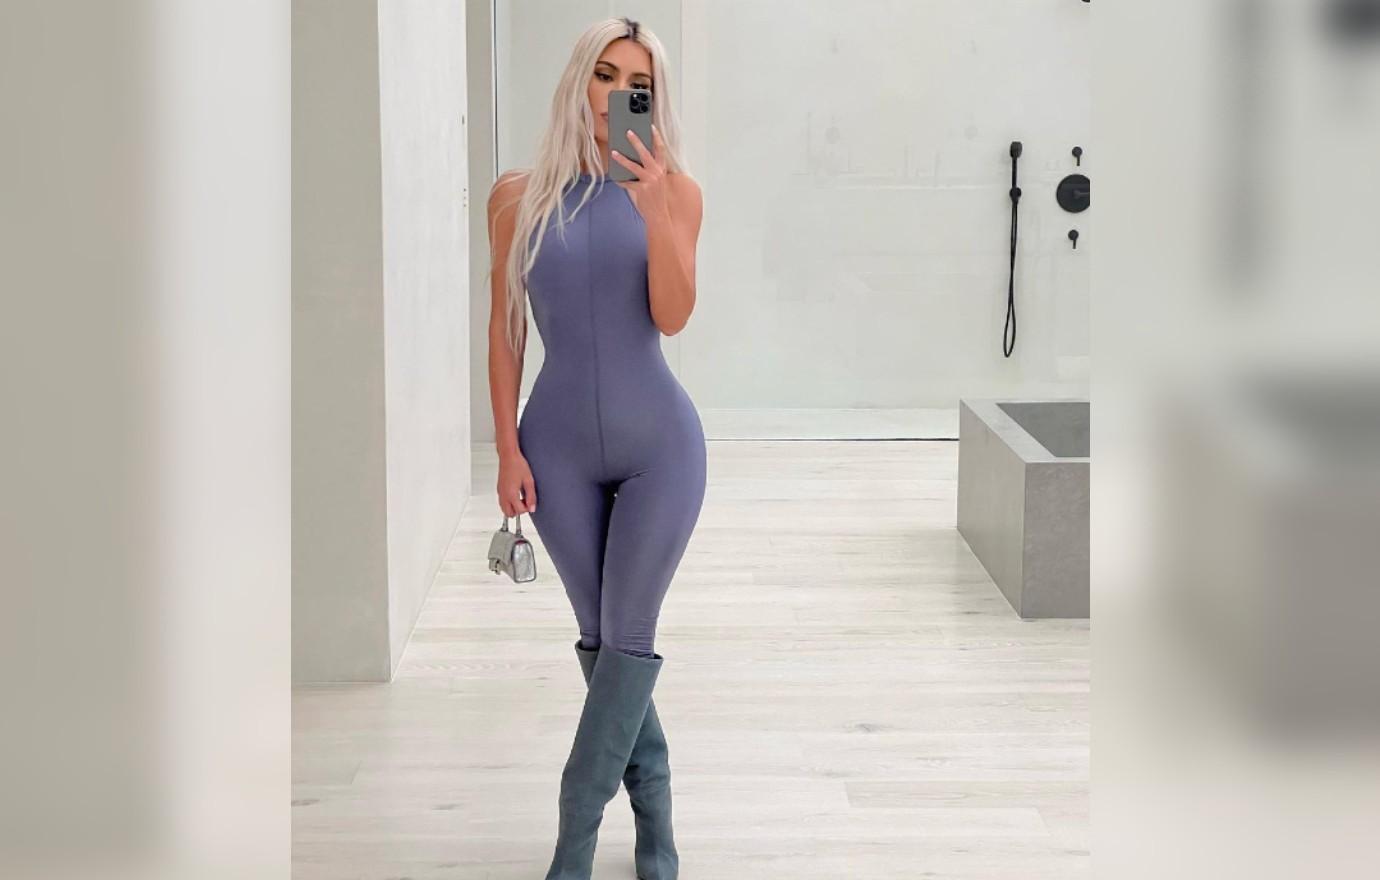 She's her own best ad! Kim Kardashian flashes Spanx in skintight